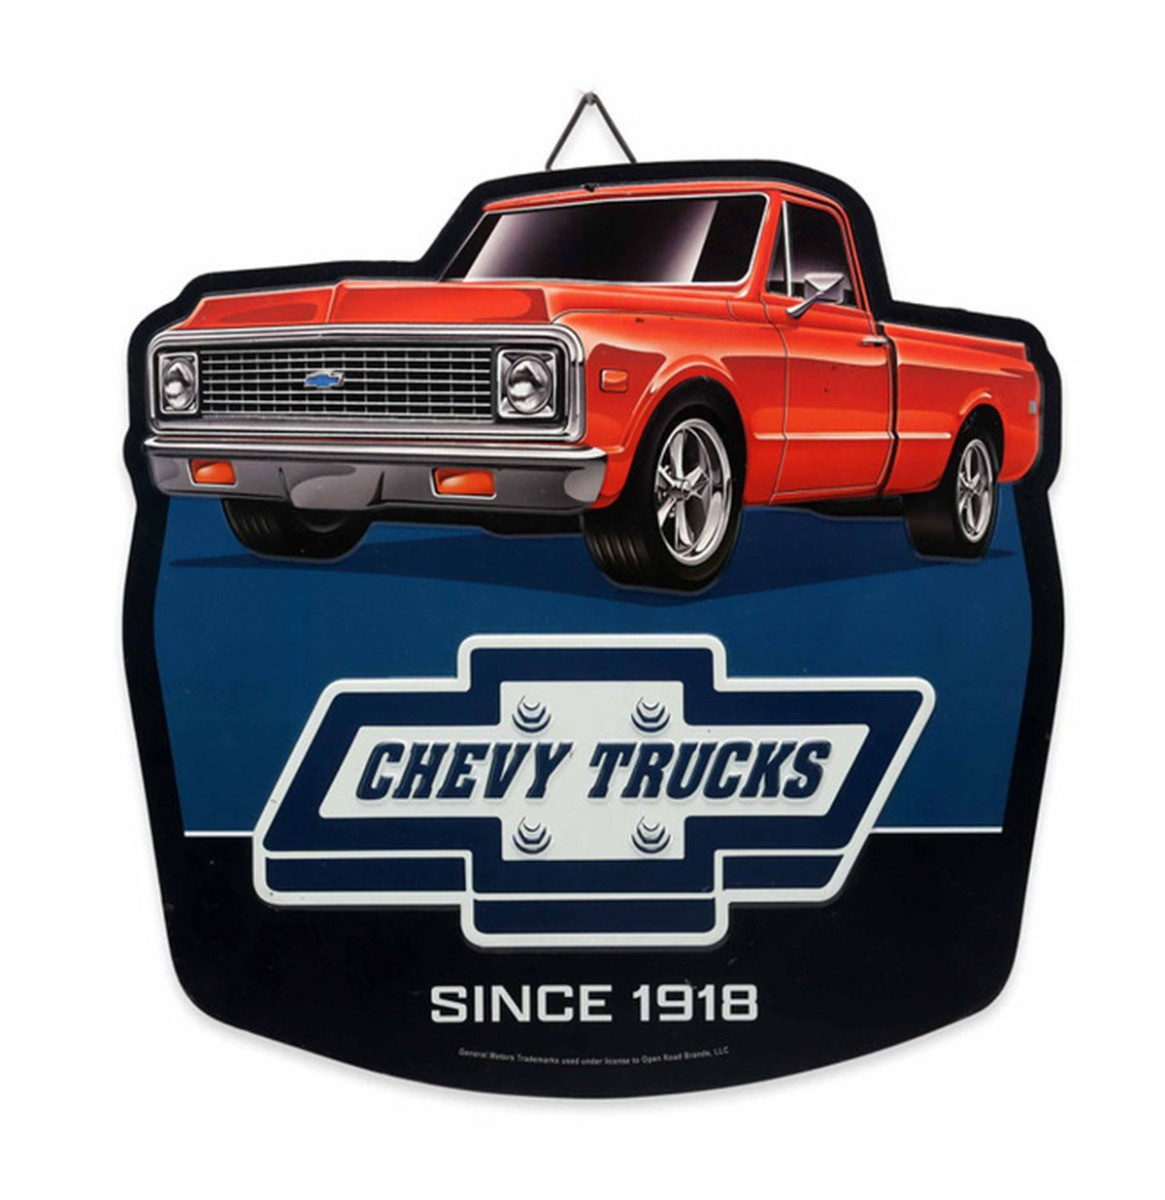 Chevy Trucks Since 1918 Metalen Bord - 30 x 30cm